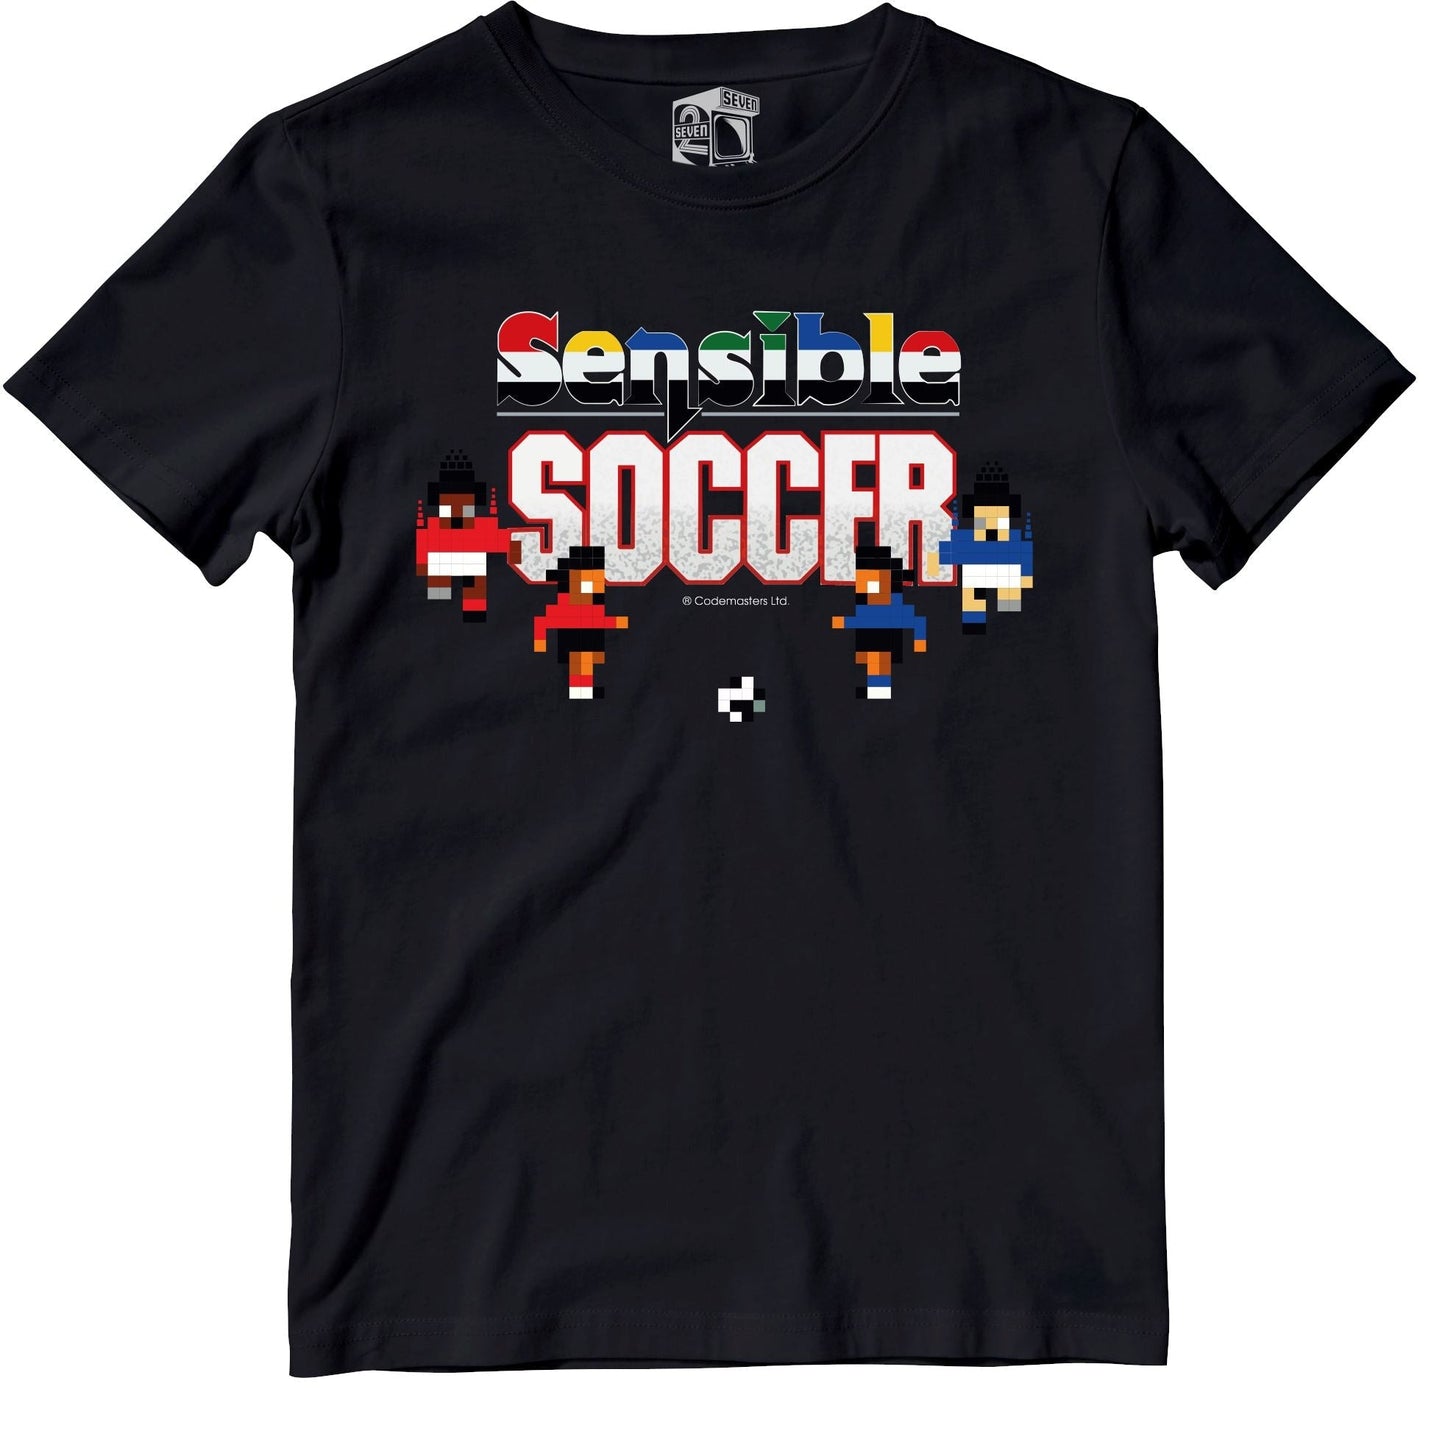 Sensible Soccer Coloured Logo Match Play Retro Gaming Kids T-Shirt (SIOW Edition) Kids T-Shirt Seven Squared 3-4 Years Black 